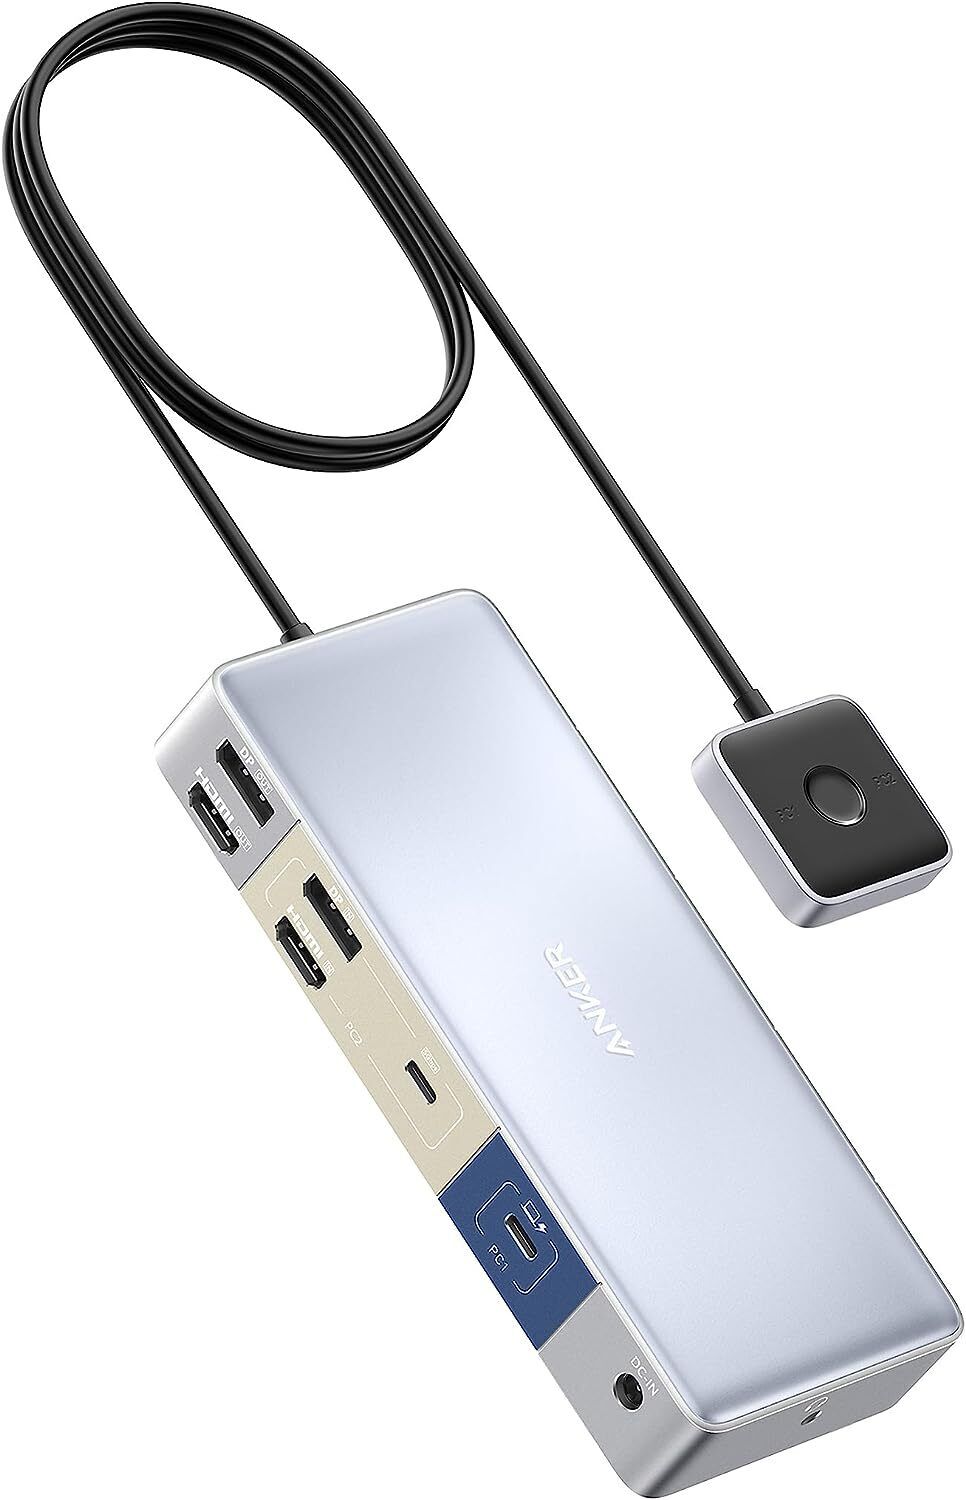 Anker USB C Docking Station KVM Switch Dual 4K Monitor Display for Laptop/PC/Mac